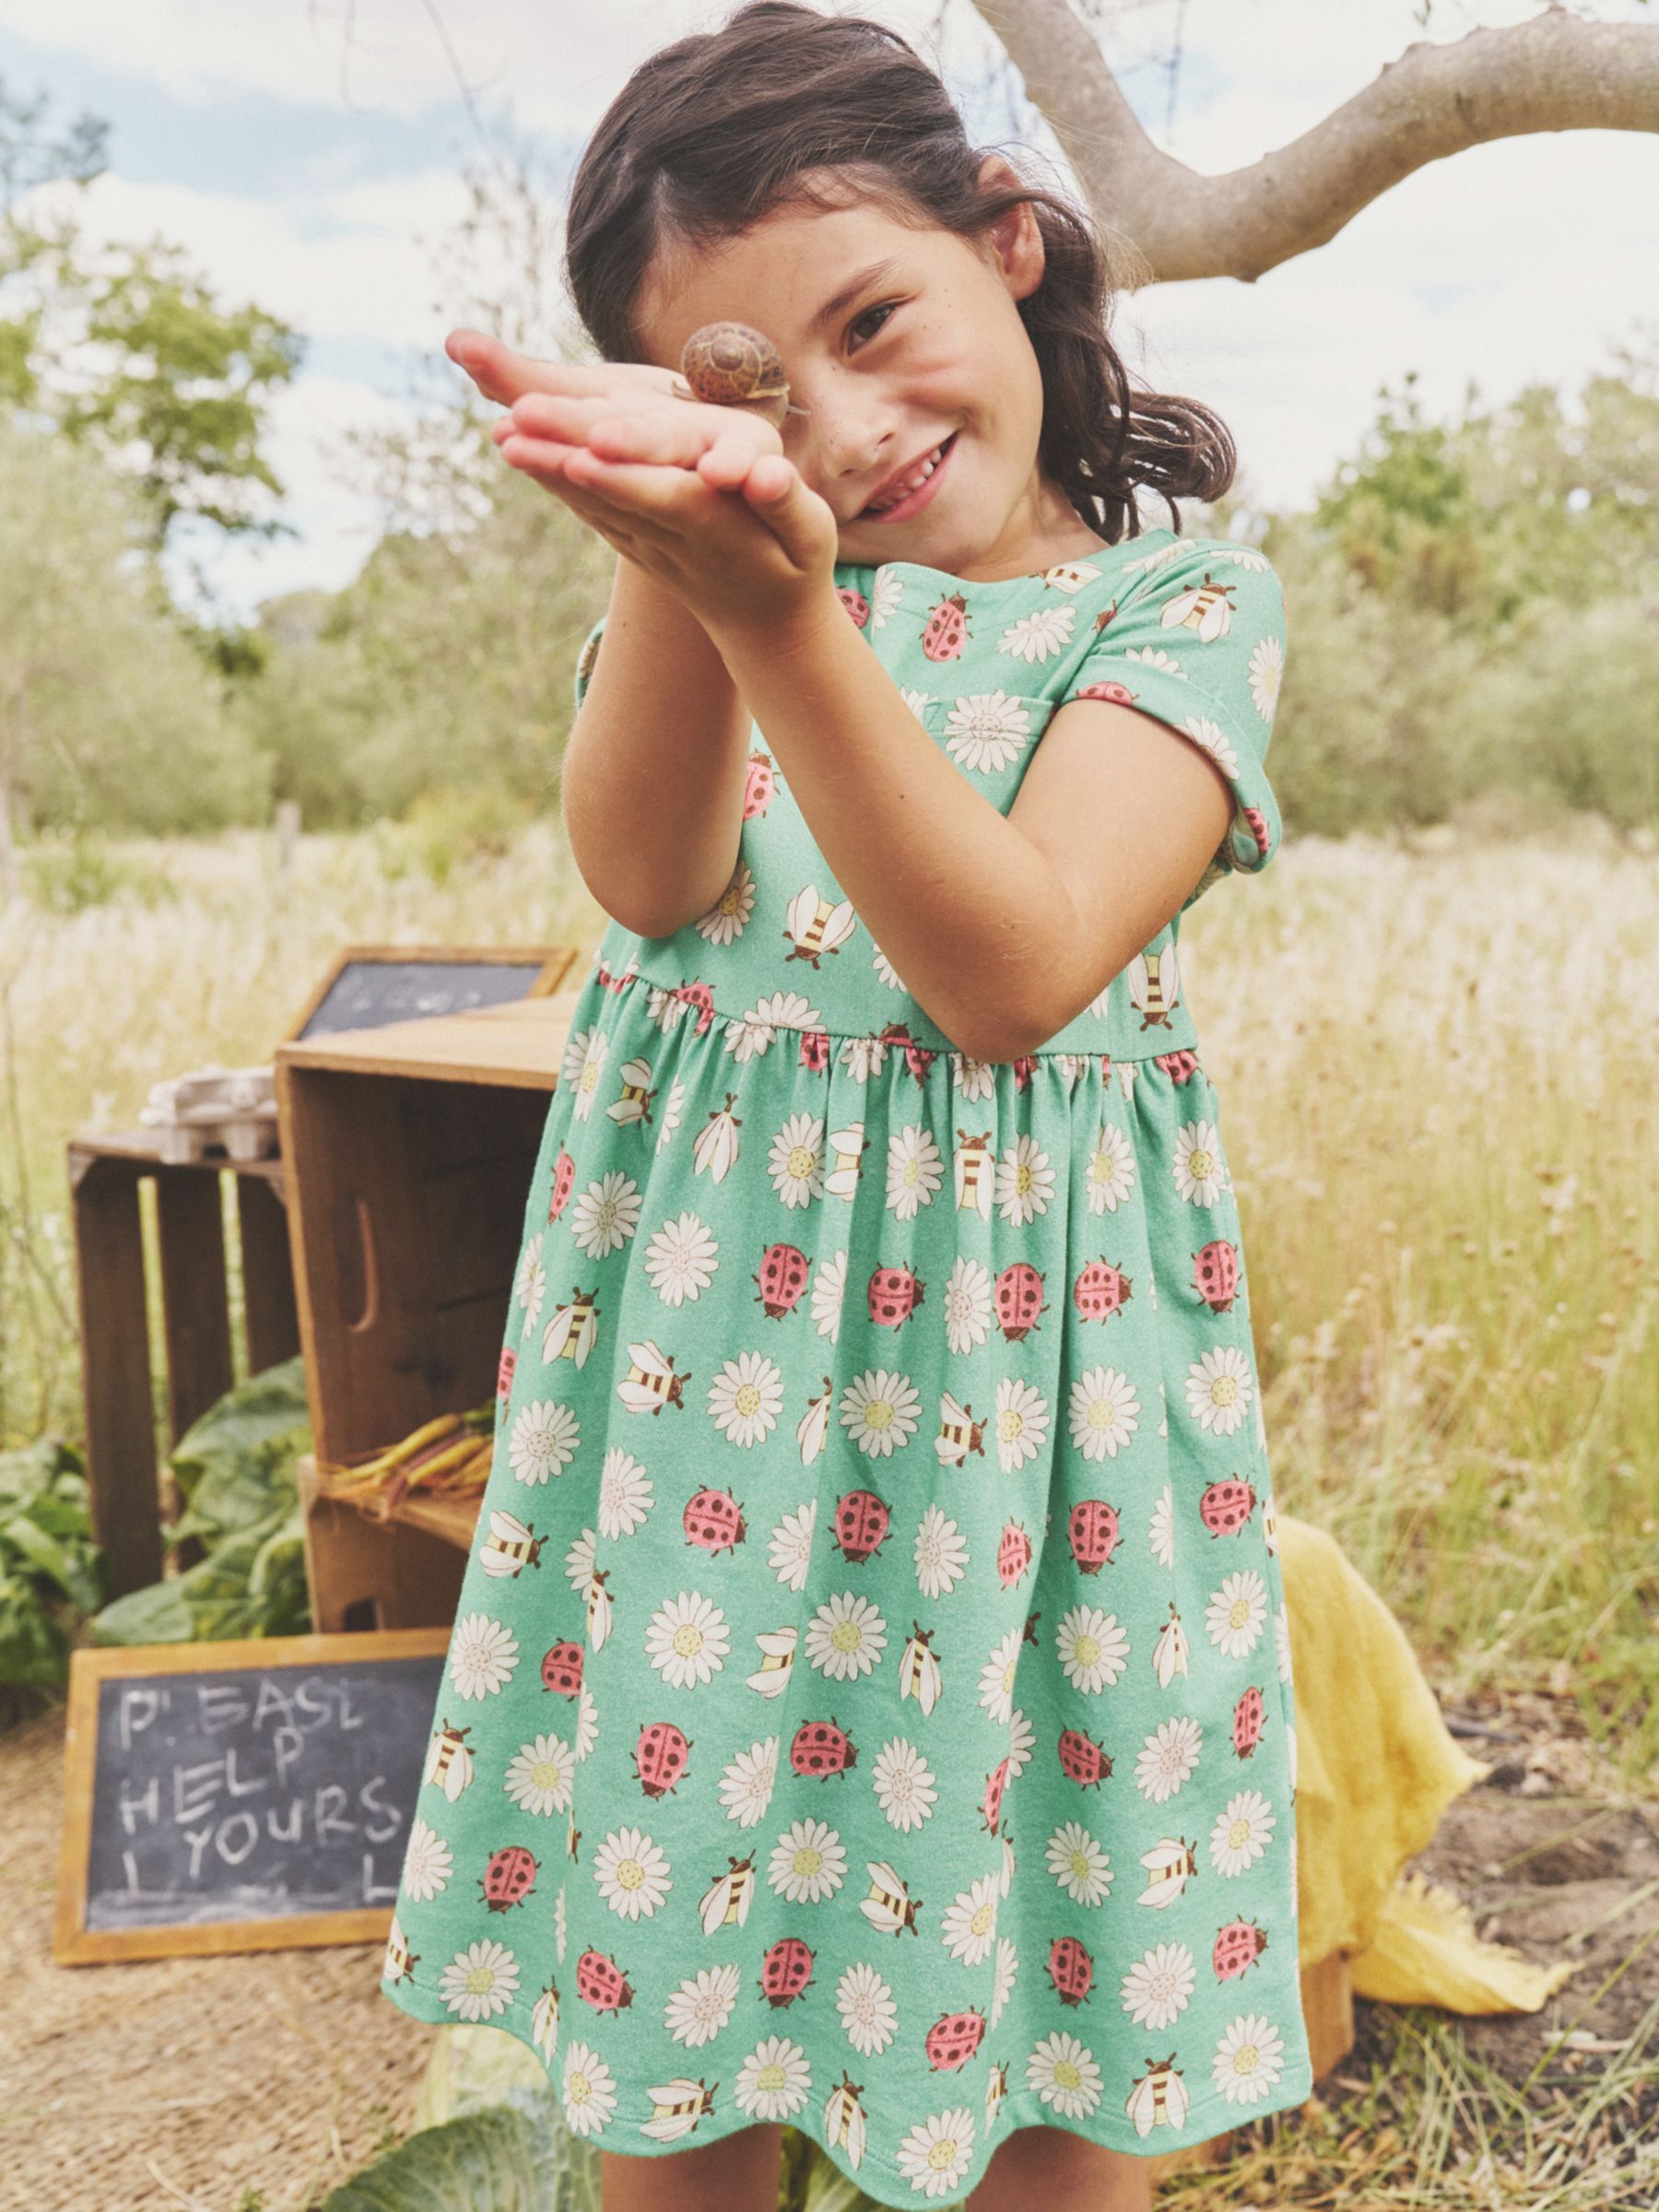 Mini Boden Kids' Fun Daisy & Bugs Print Short Sleeved Jersey Dress, Pea Green, 4-5Y